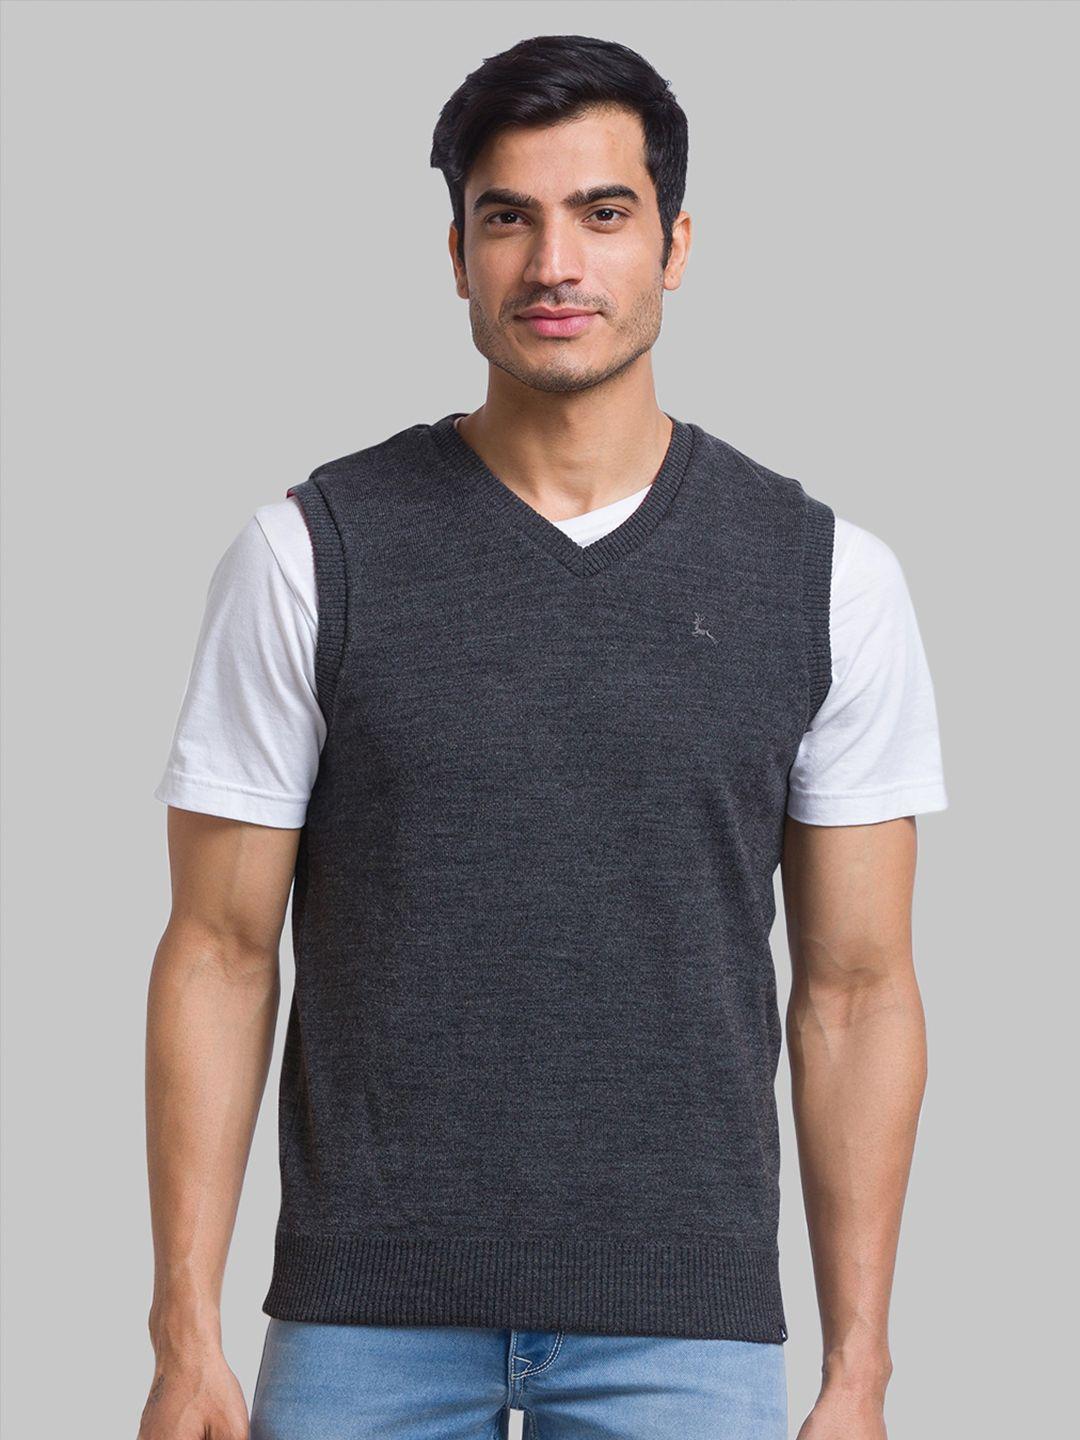 parx-men-sleeveless-v-neck-acrylic-sweater-vest